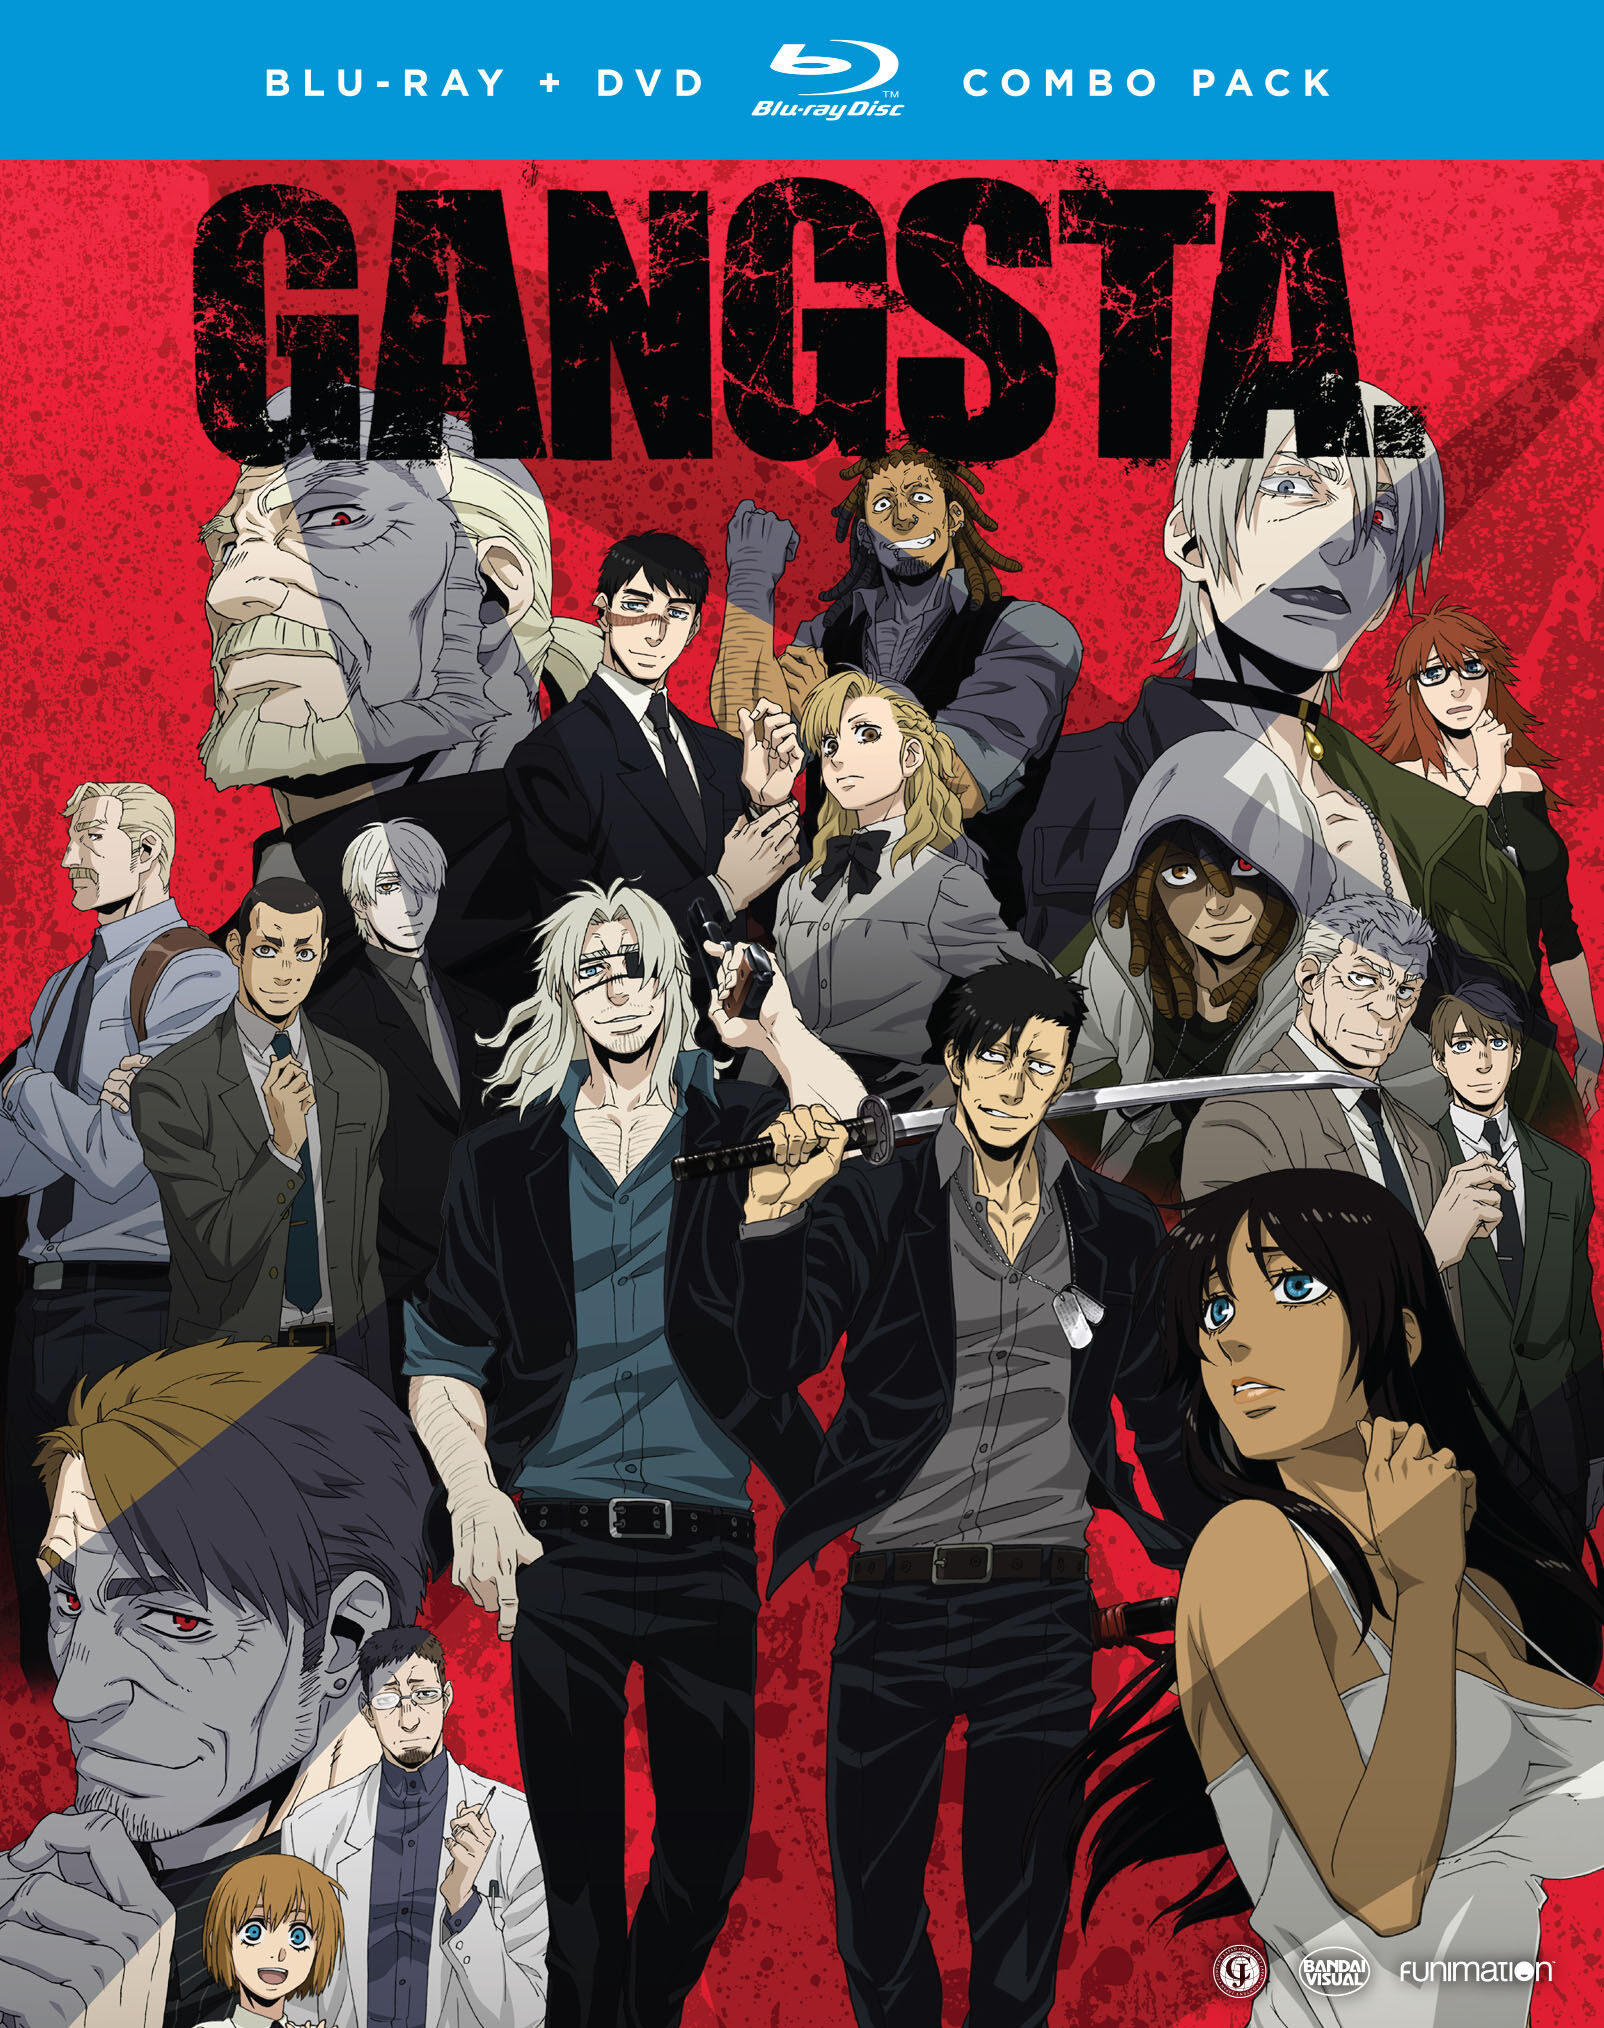 GANGSTA. - The Complete Series - Blu-ray + DVD | Crunchyroll Store